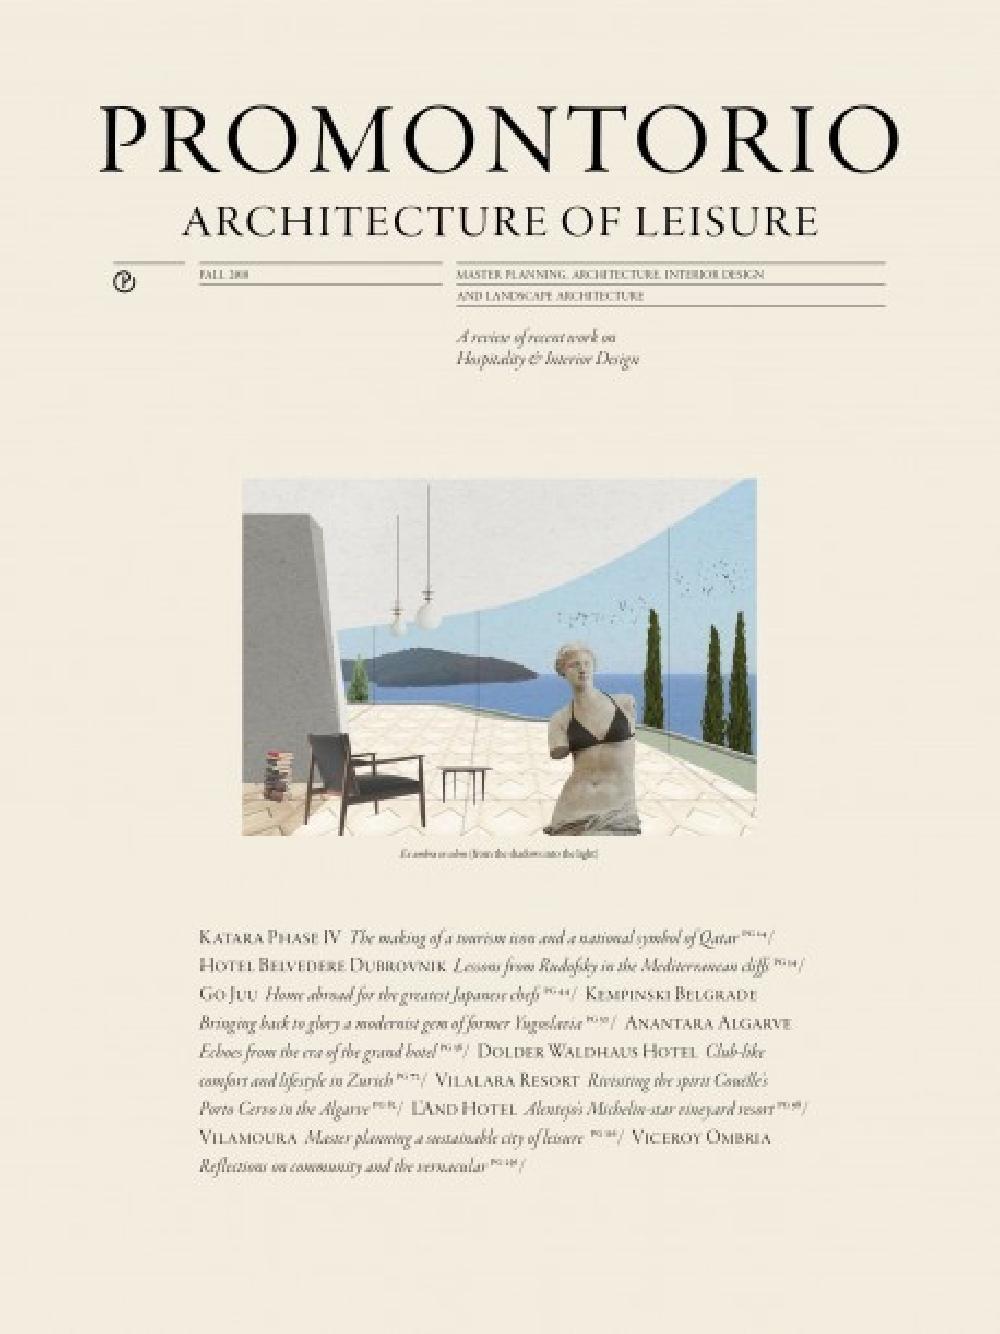 Promontorio: Architecture of Leisure